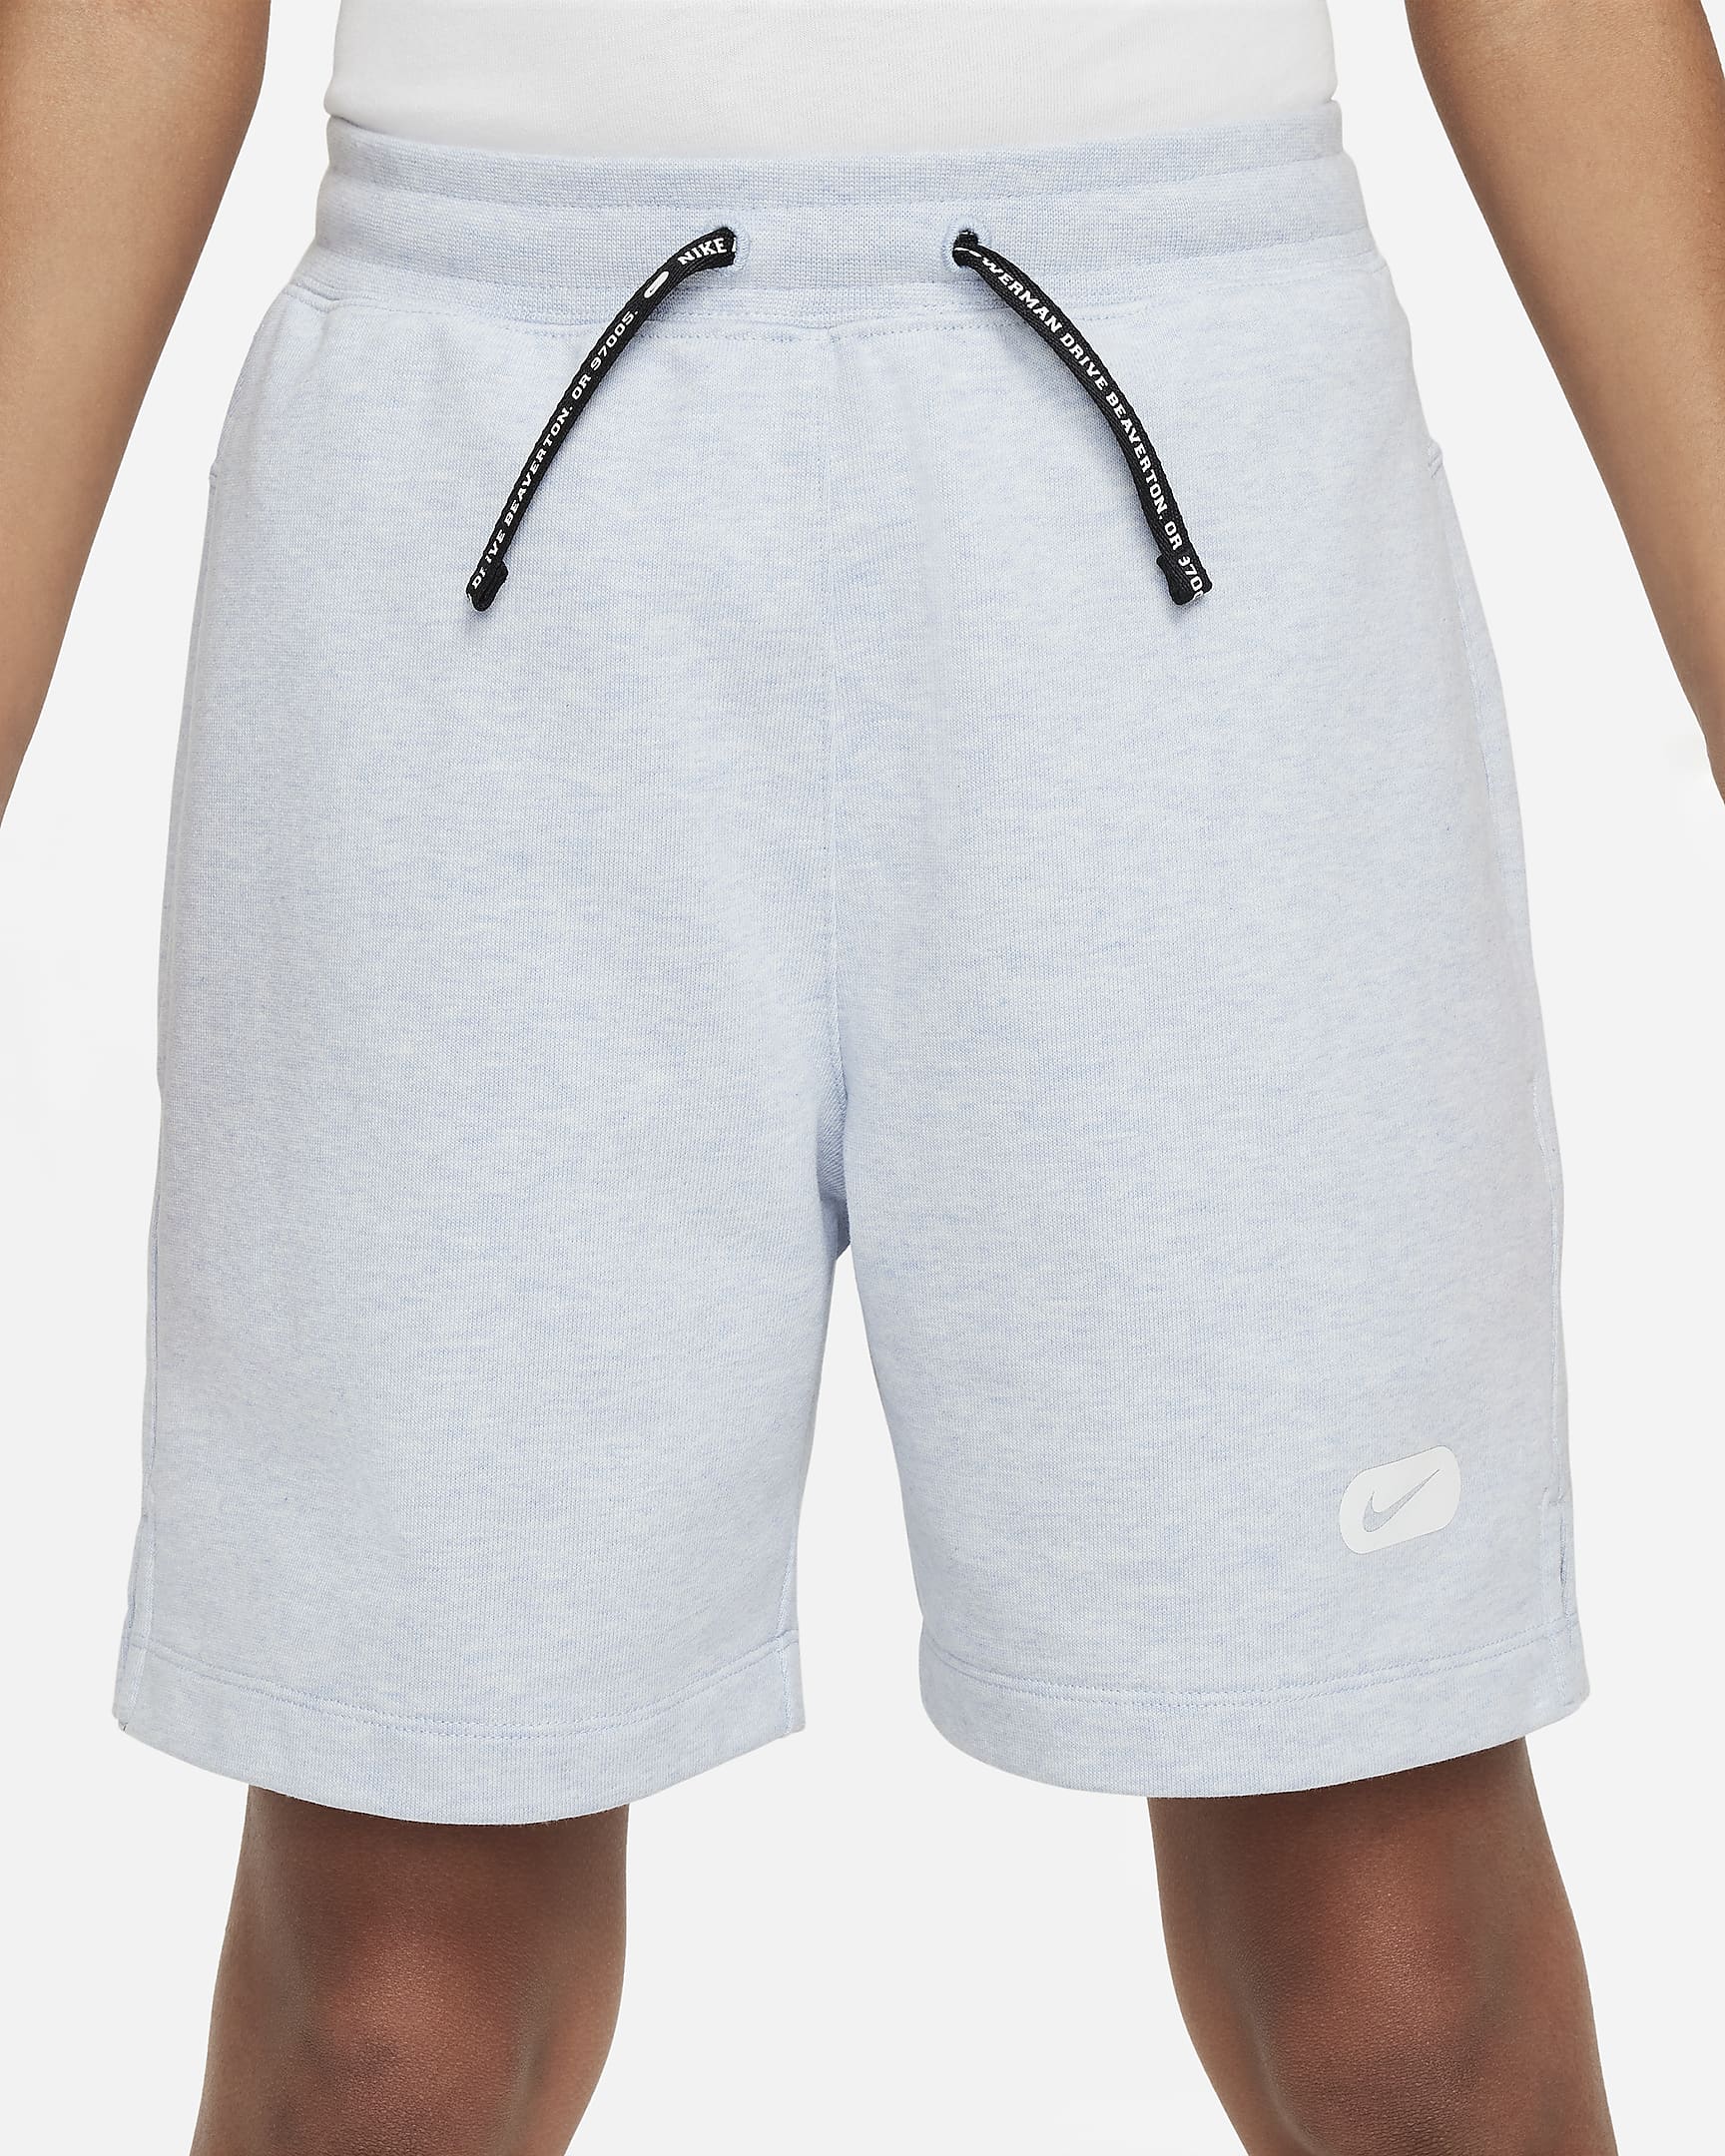 Nike Dri-FIT Athletics Older Kids' (Boys') Fleece Training Shorts - Light Armoury Blue/Heather/White